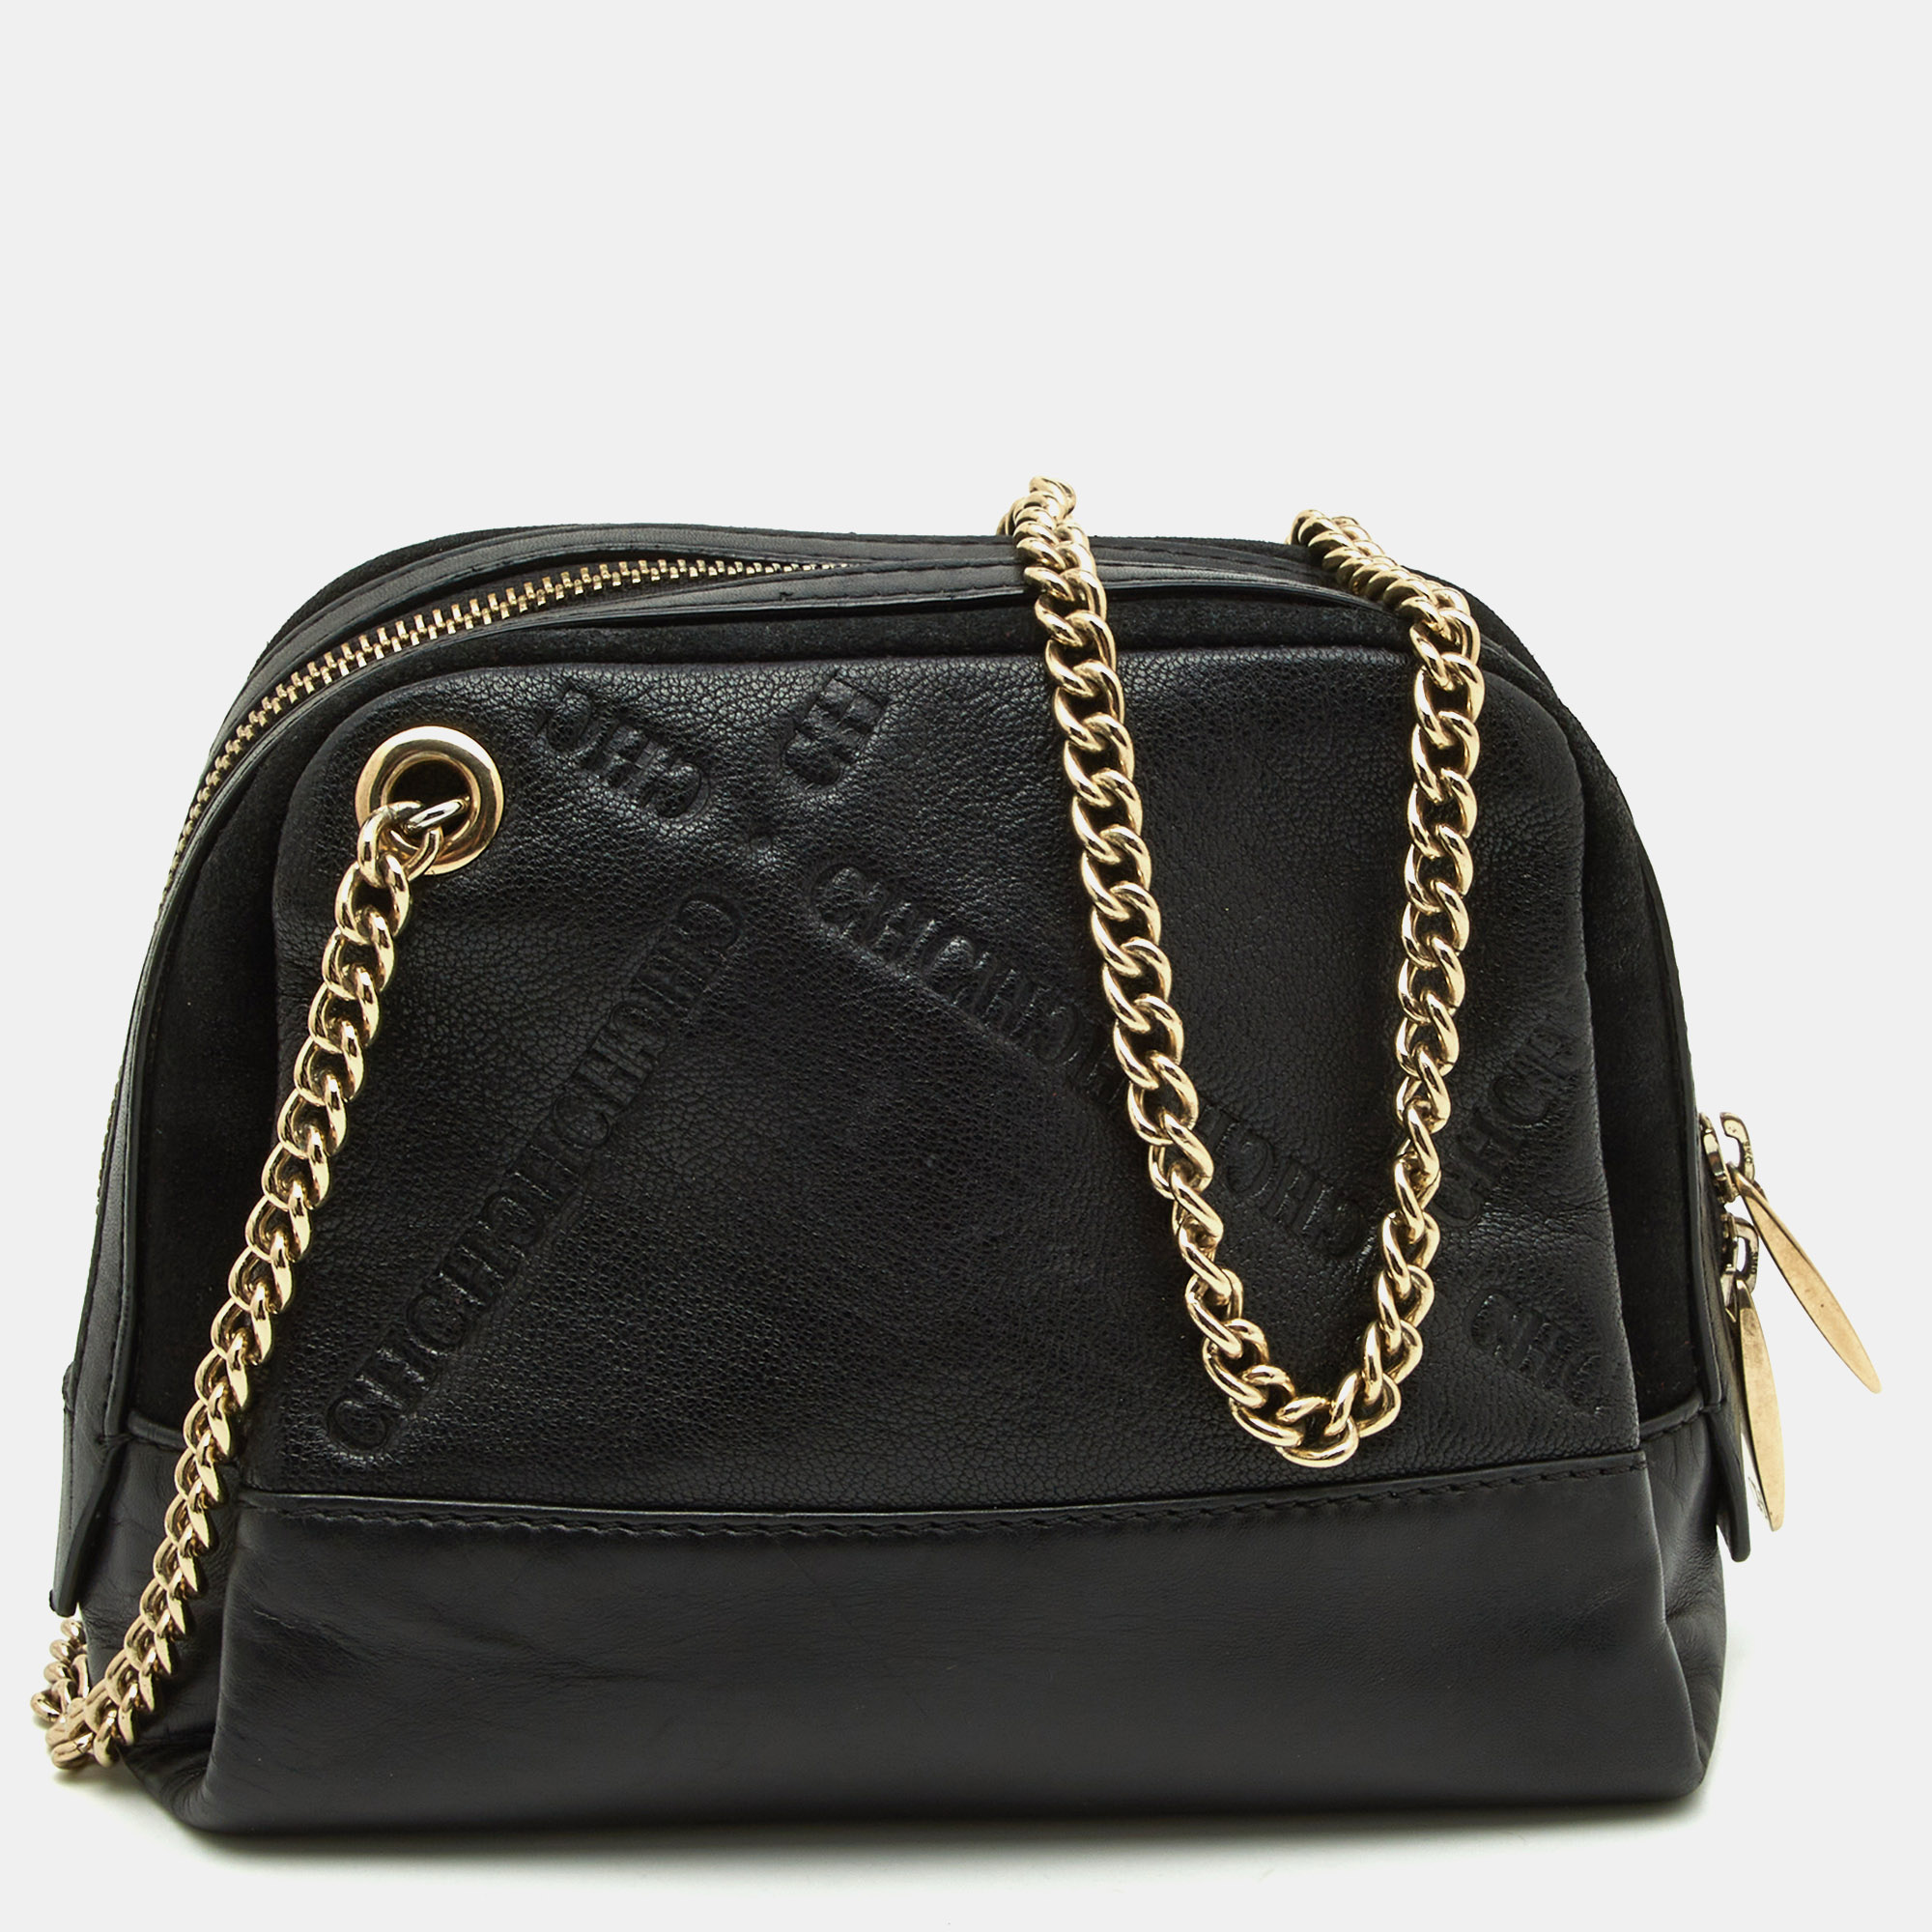 Pre-owned Ch Carolina Herrera Black Leather Crossbody Bag